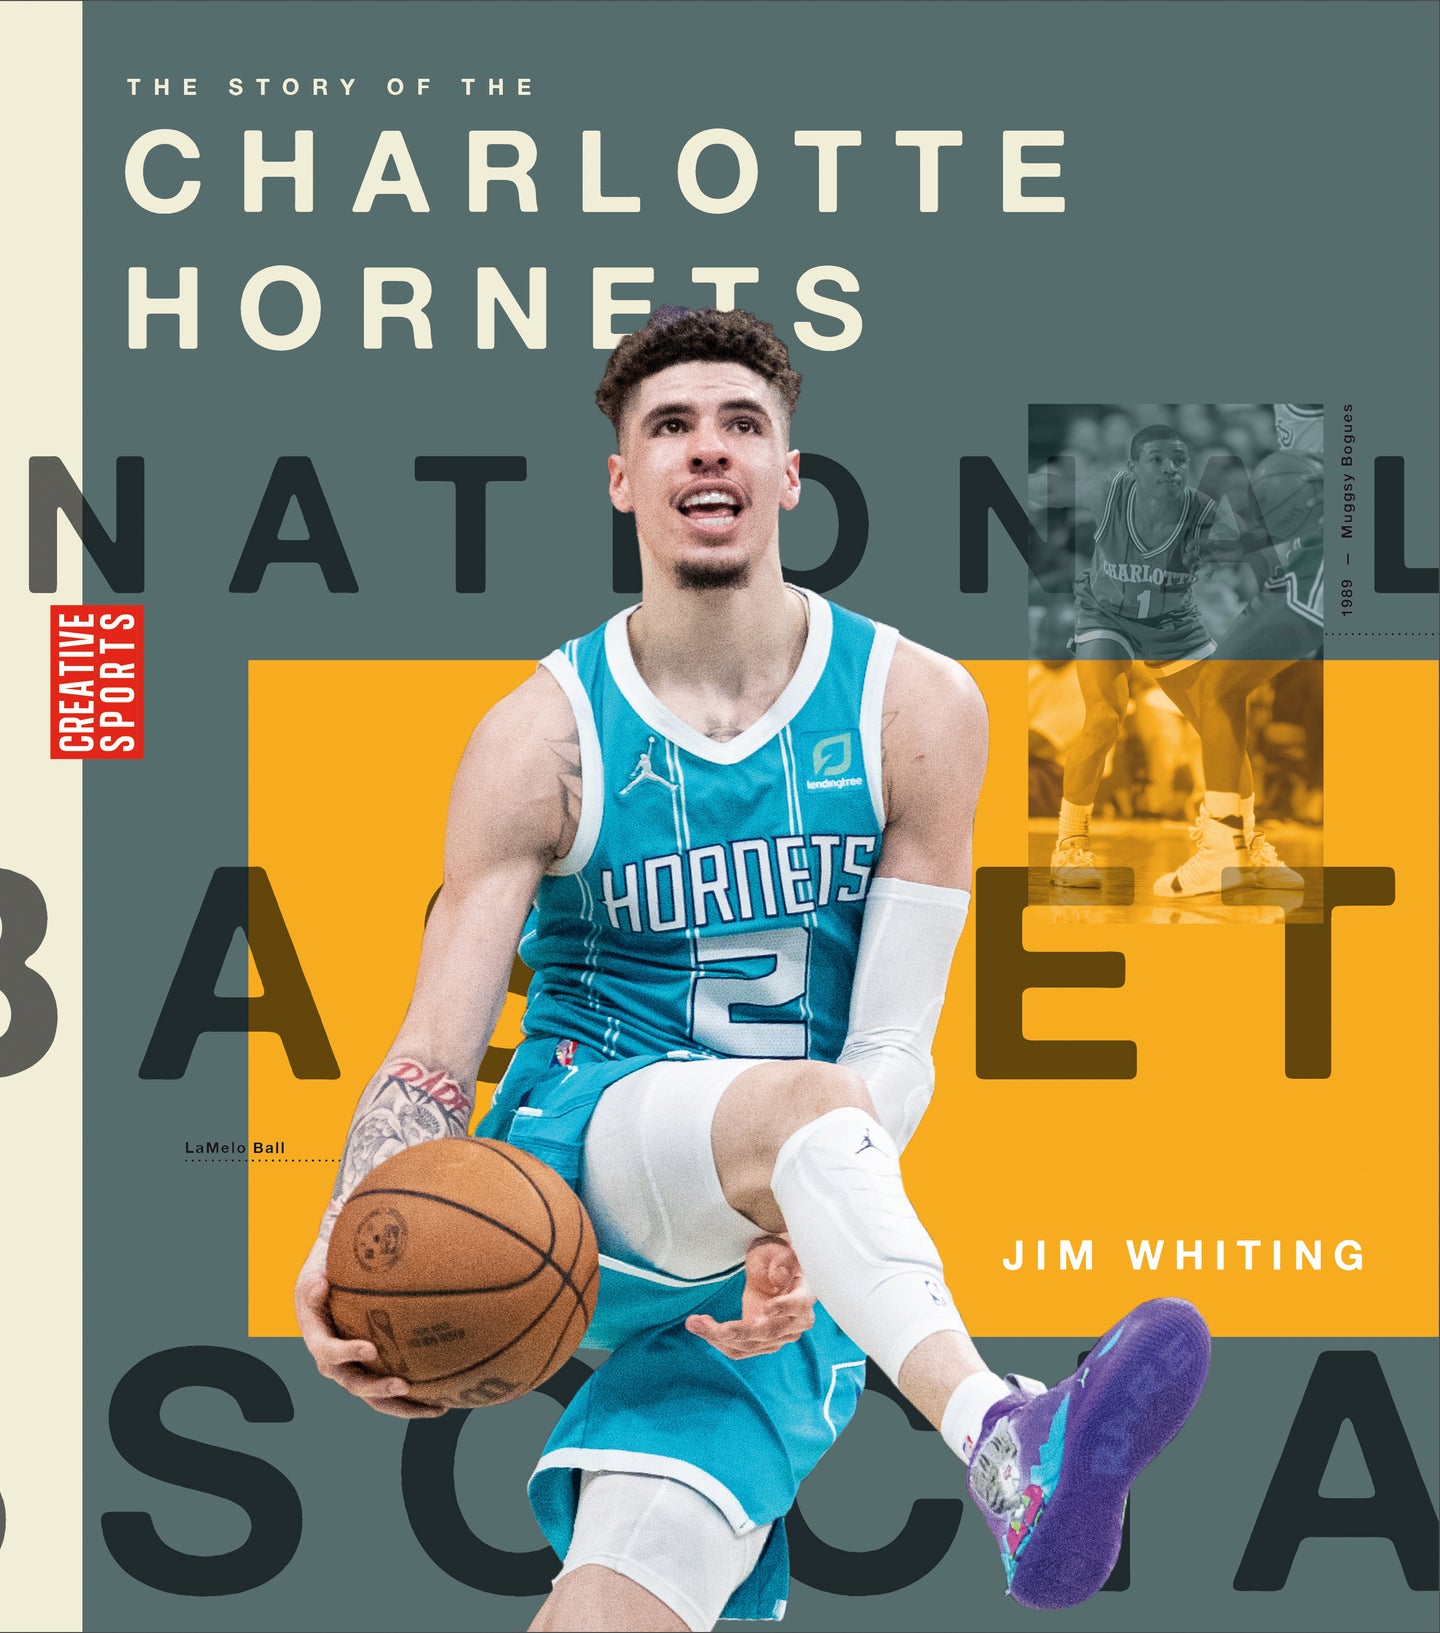 A History of Hoops (2023): Die Geschichte der Charlotte Hornets